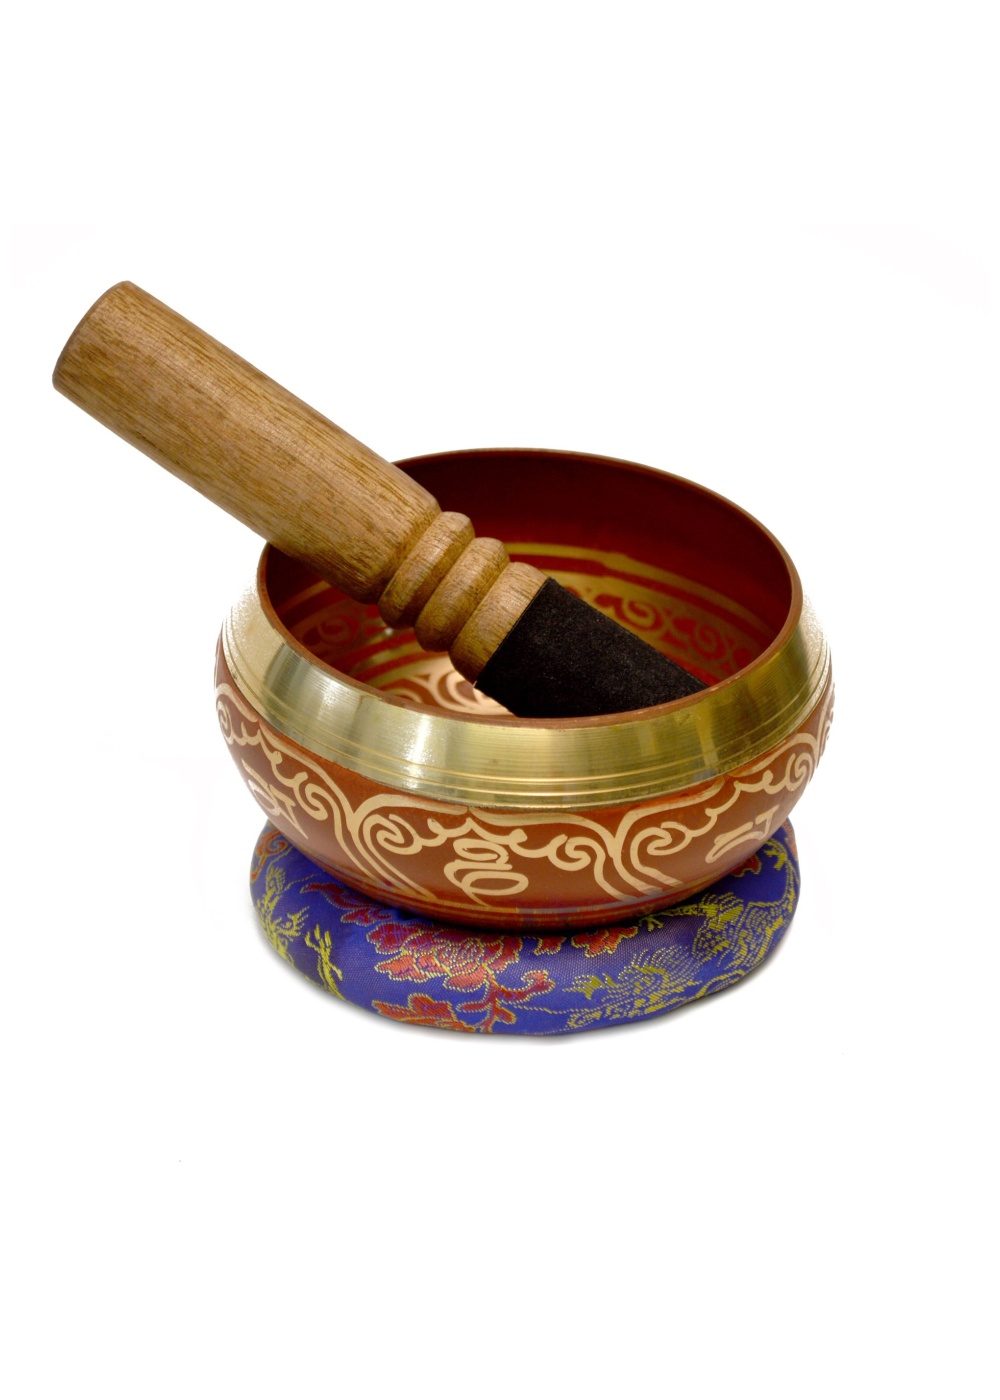  Handmade Tibetan Singing Bowl Inches